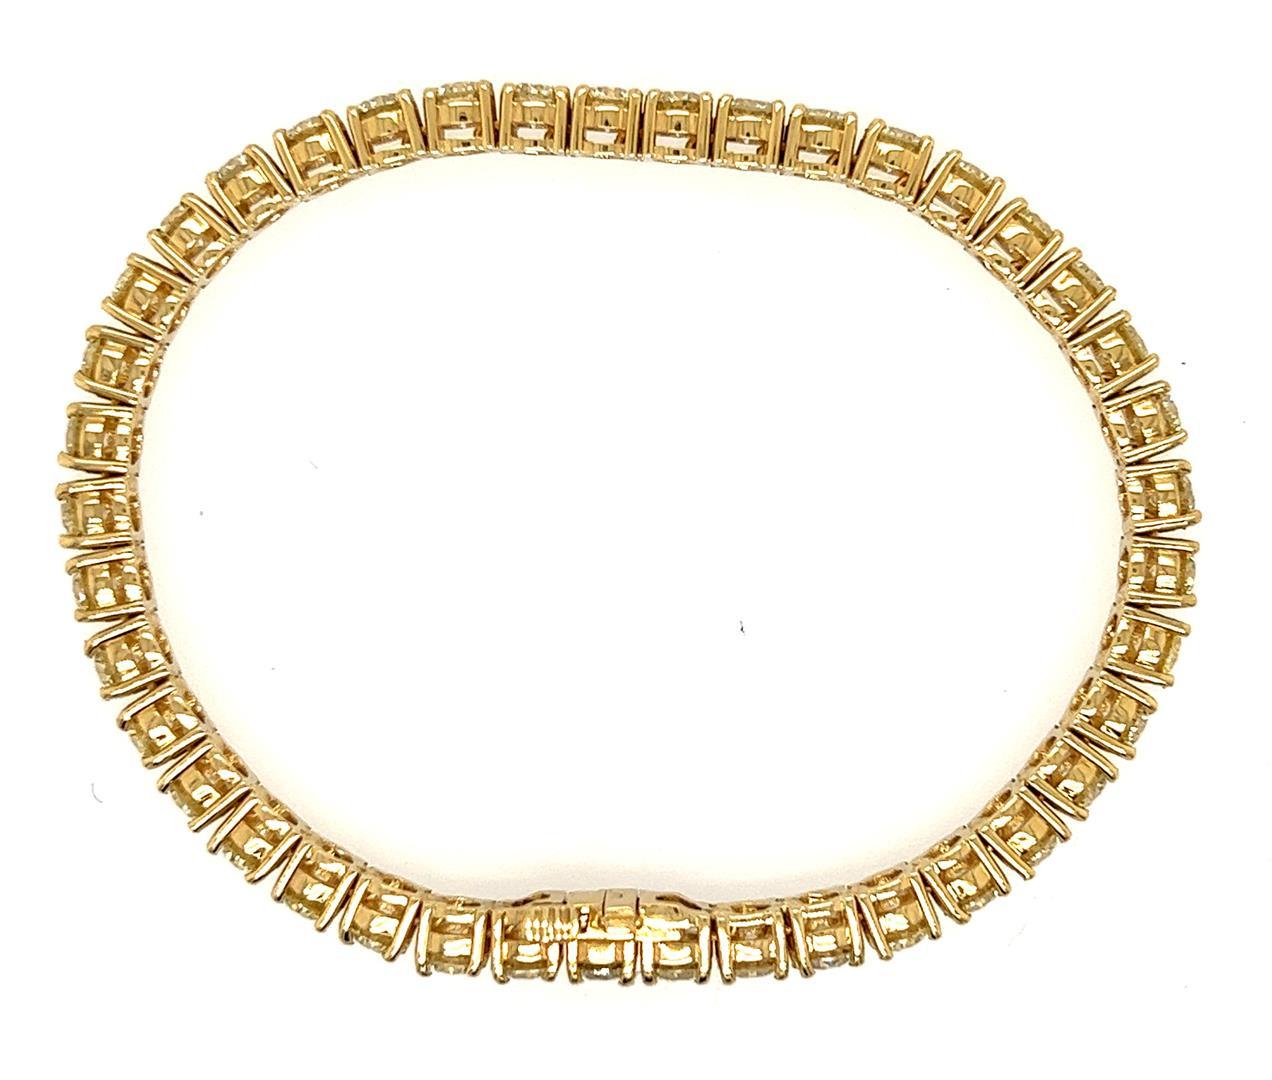 9.55 ctw Diamond Tennis Bracelet - 14KT Yellow Gold